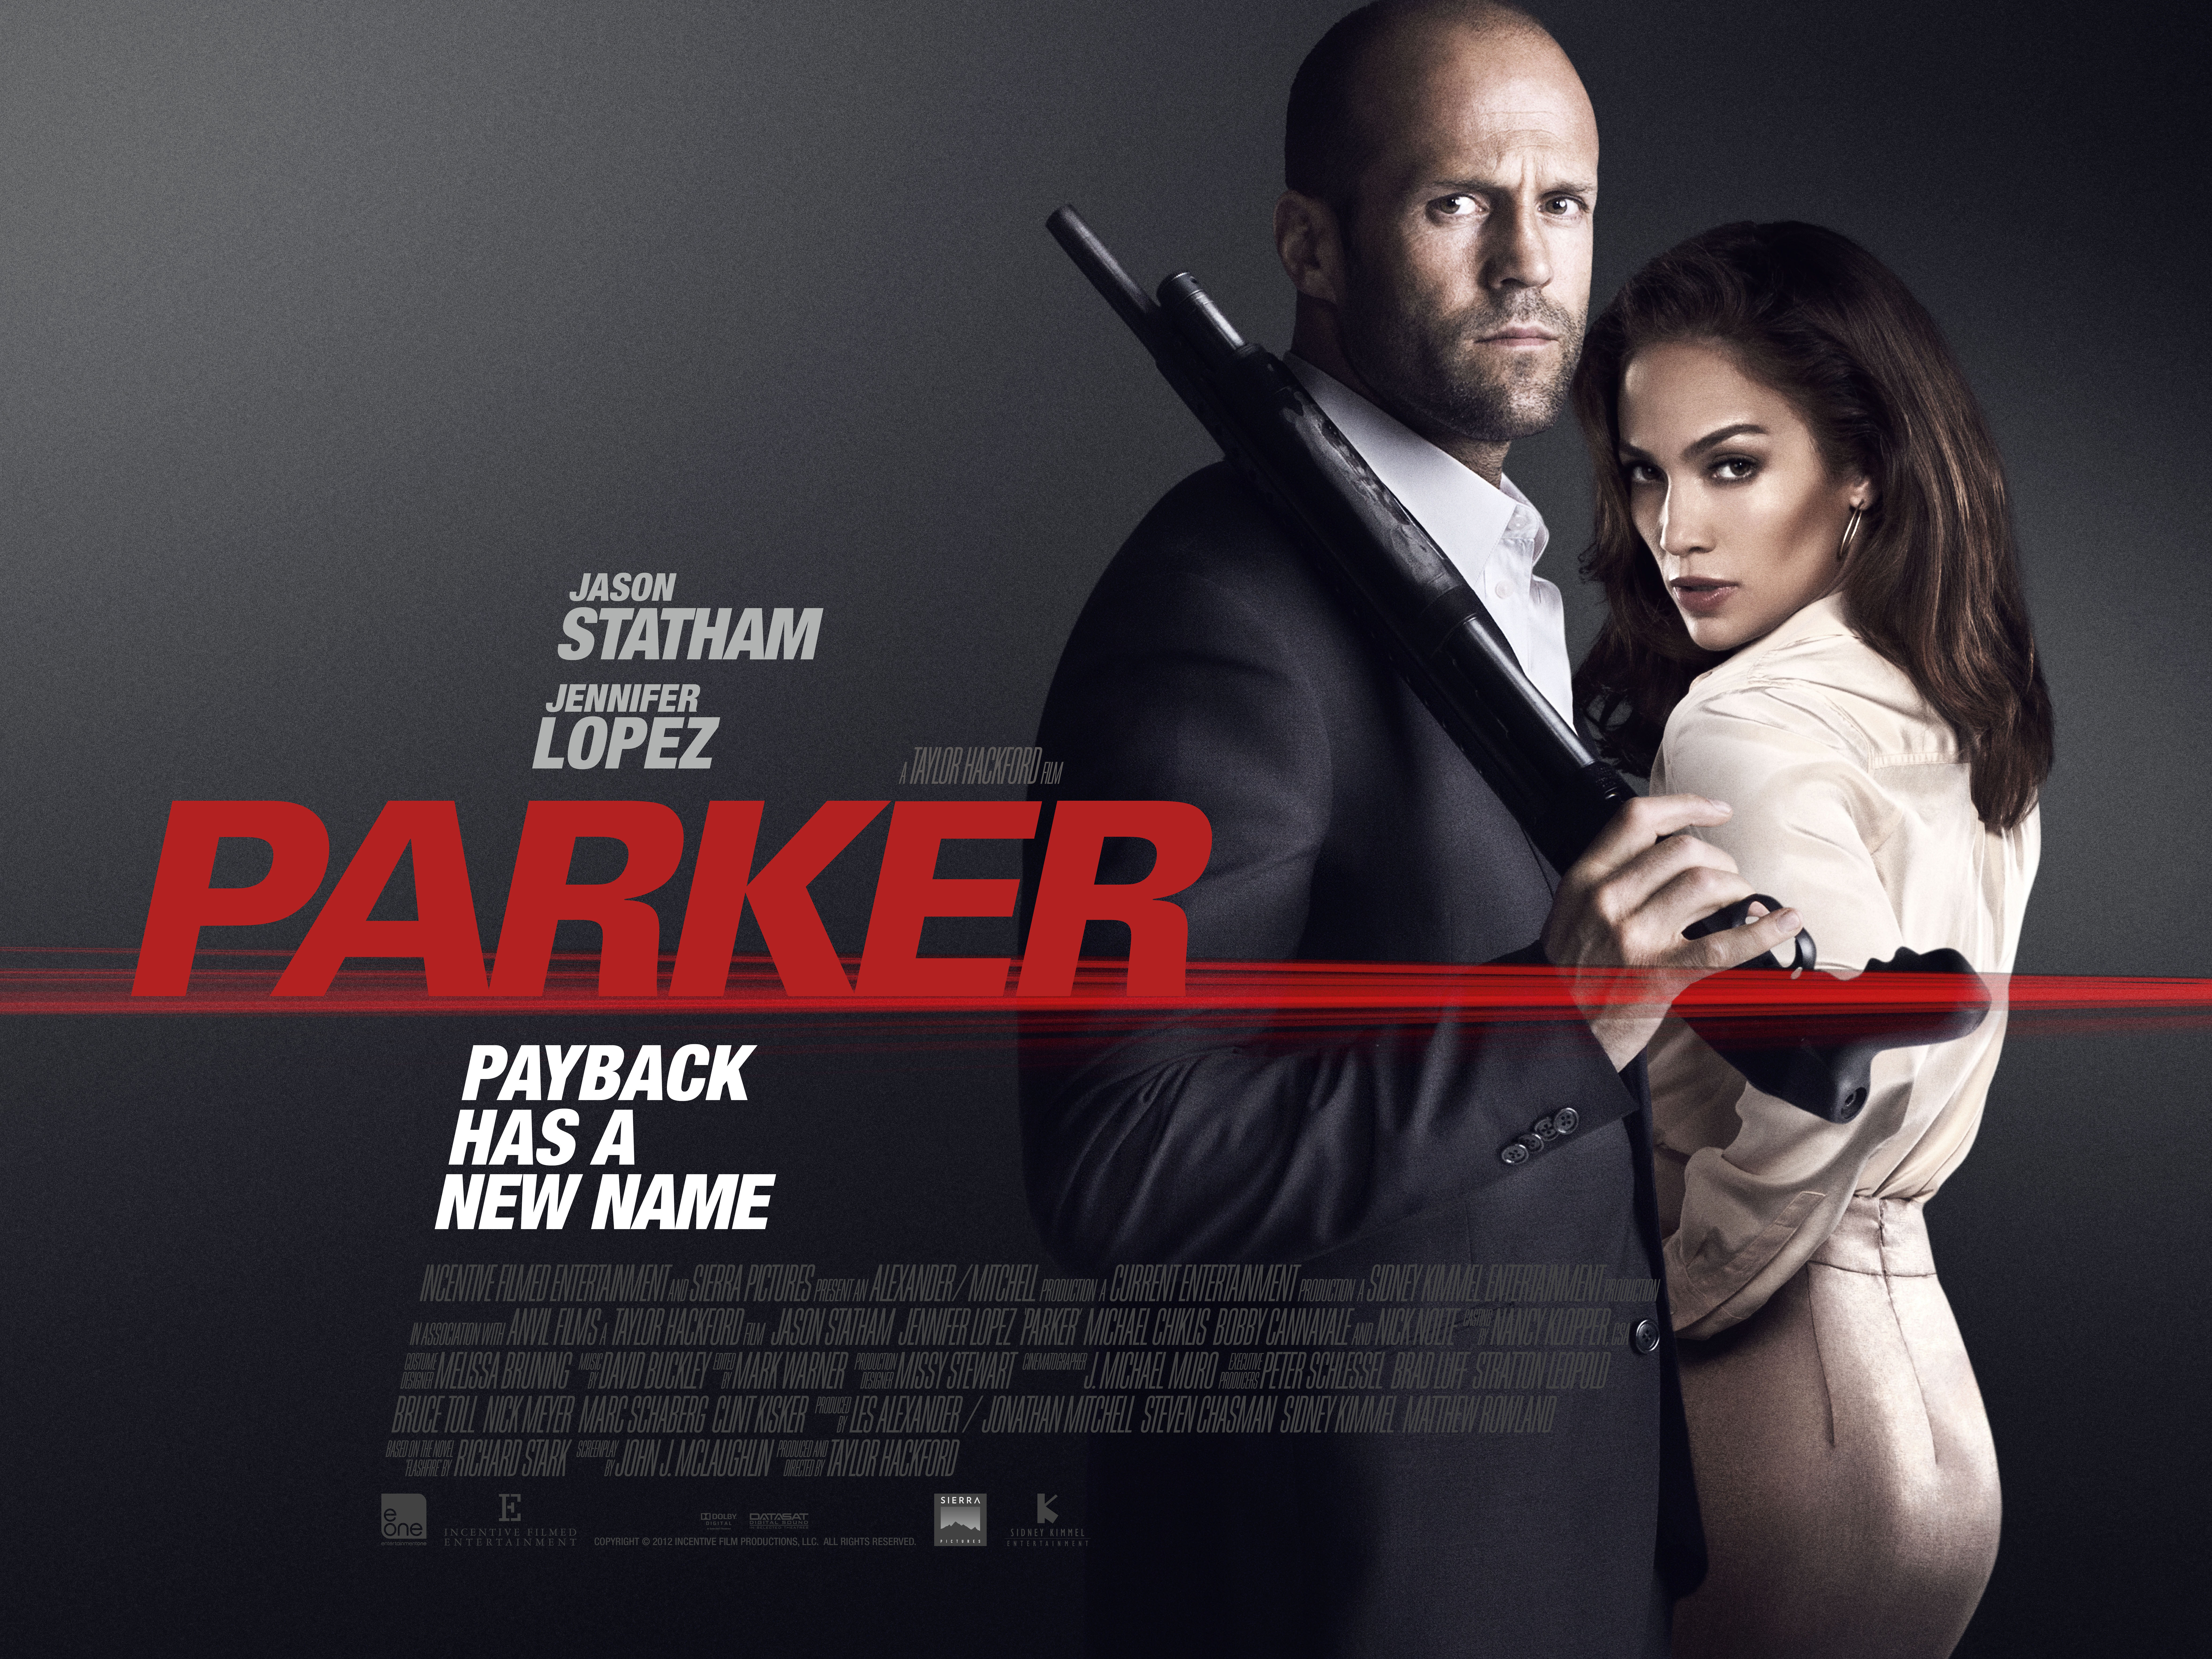 Has your new. Паркер фильм 2013 Постер. Jason Statham Паркер. Джейсон Стэтхэм Jennifer Lopez. Паркер Джейсон Стэтхэм Постер.